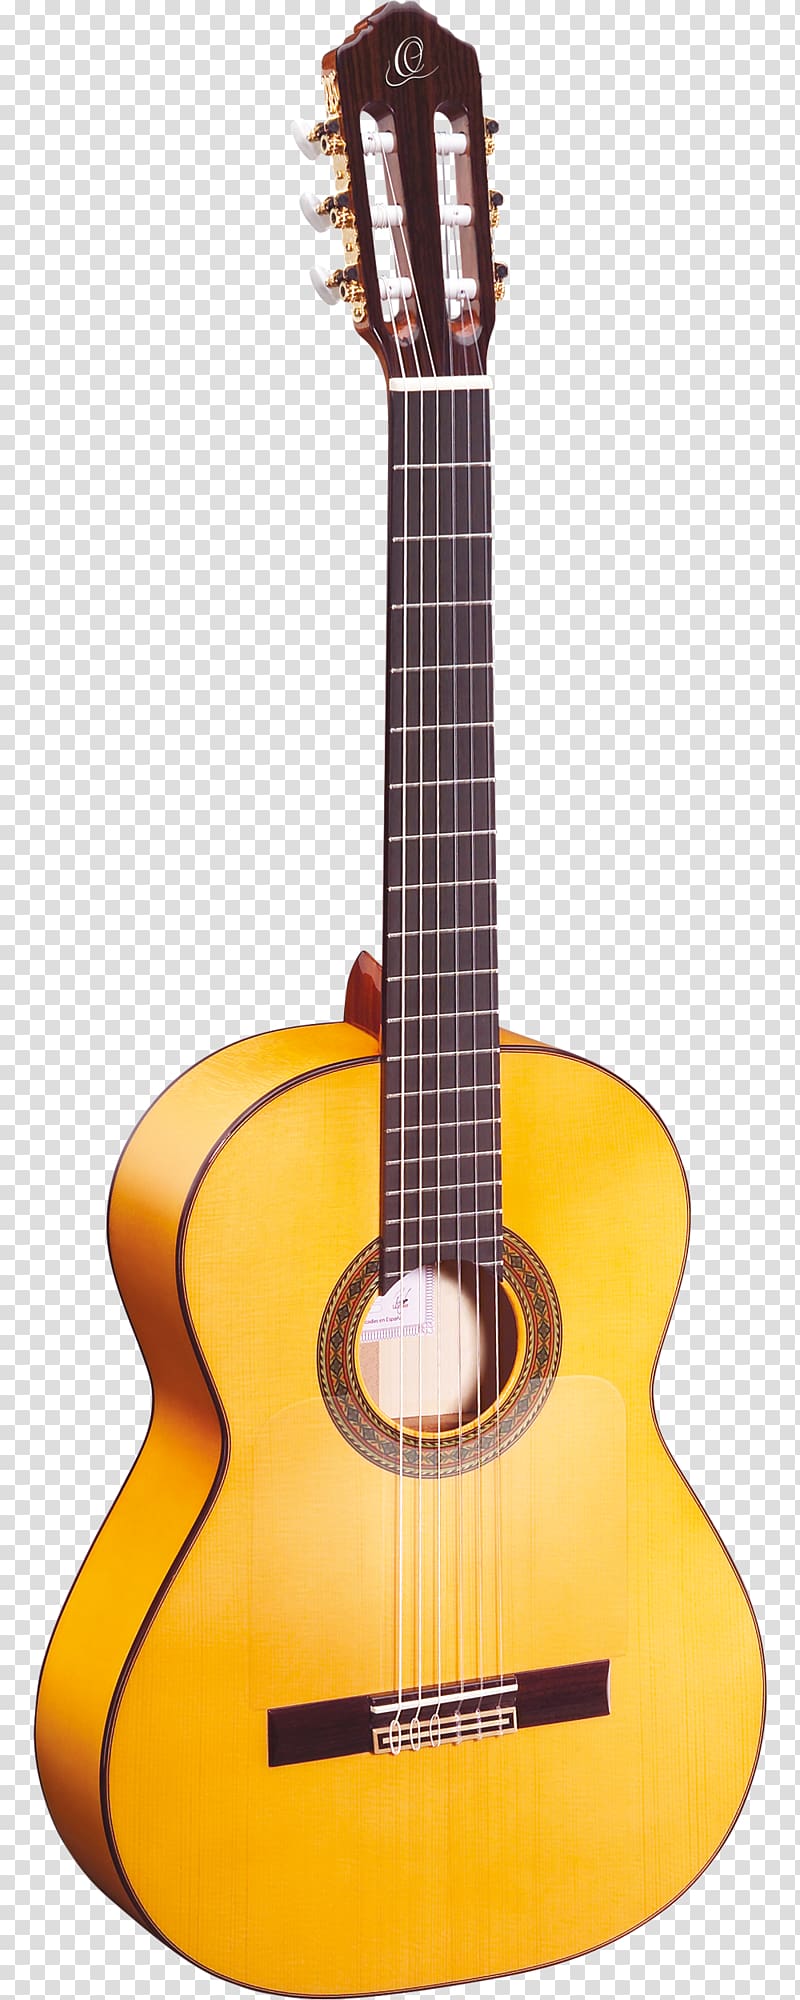 Classical guitar Flamenco guitar Musical Instruments, amancio ortega transparent background PNG clipart